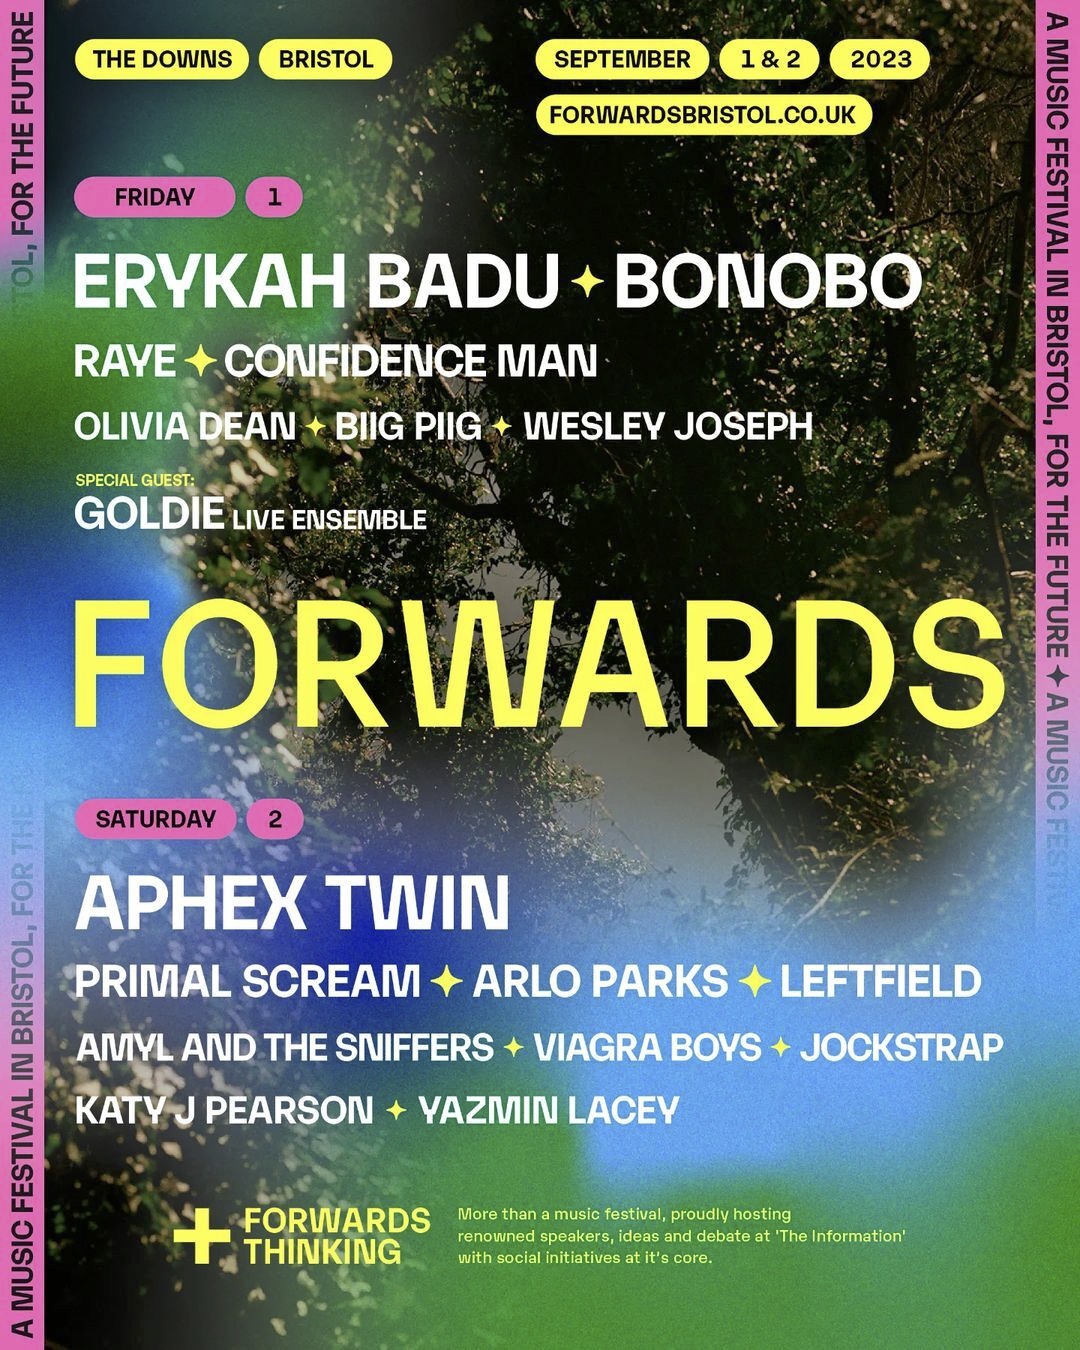 Forwards Festival 2023 lineup